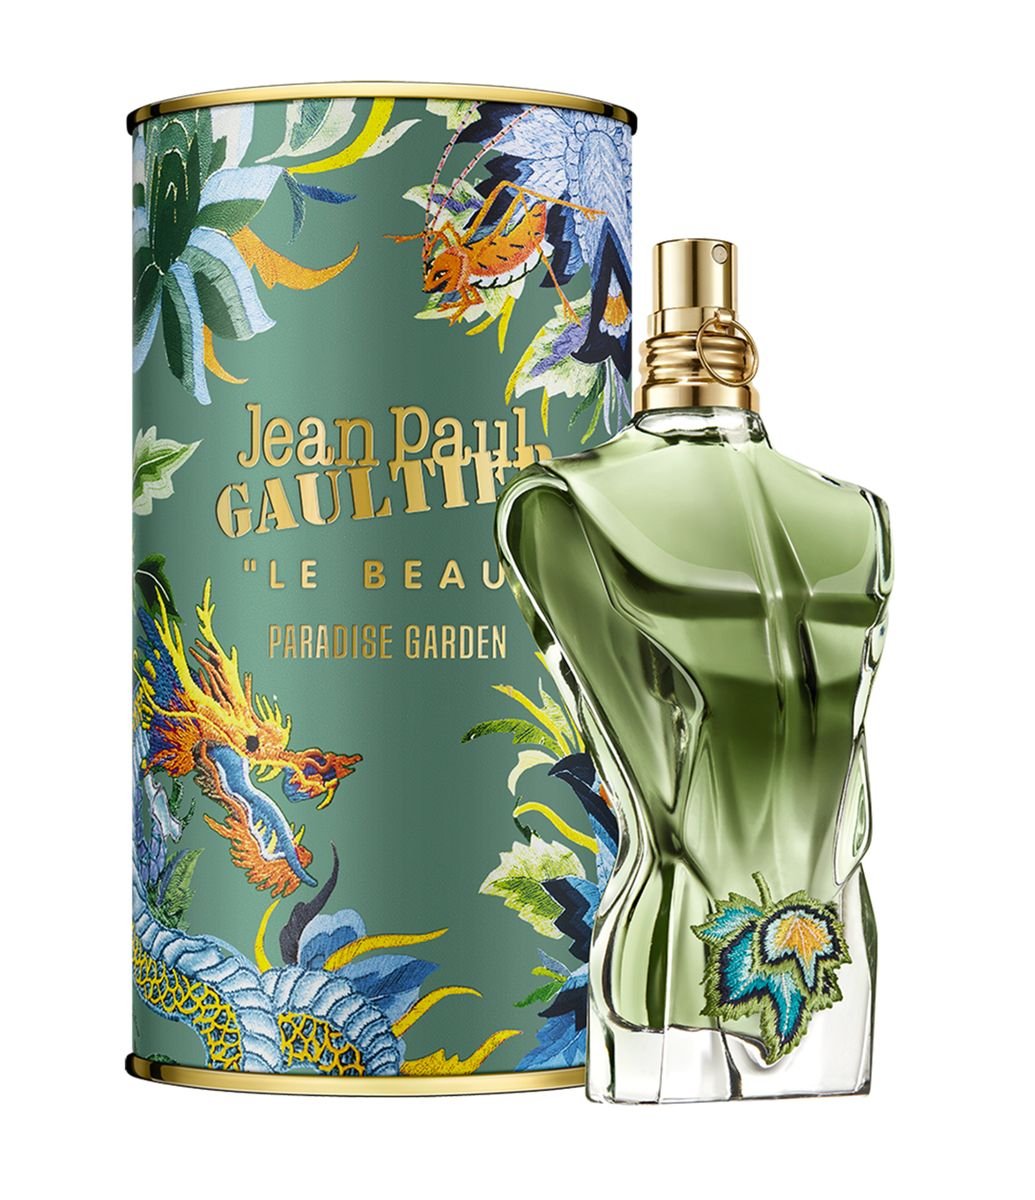 Jean Paul Gaultier perfumes